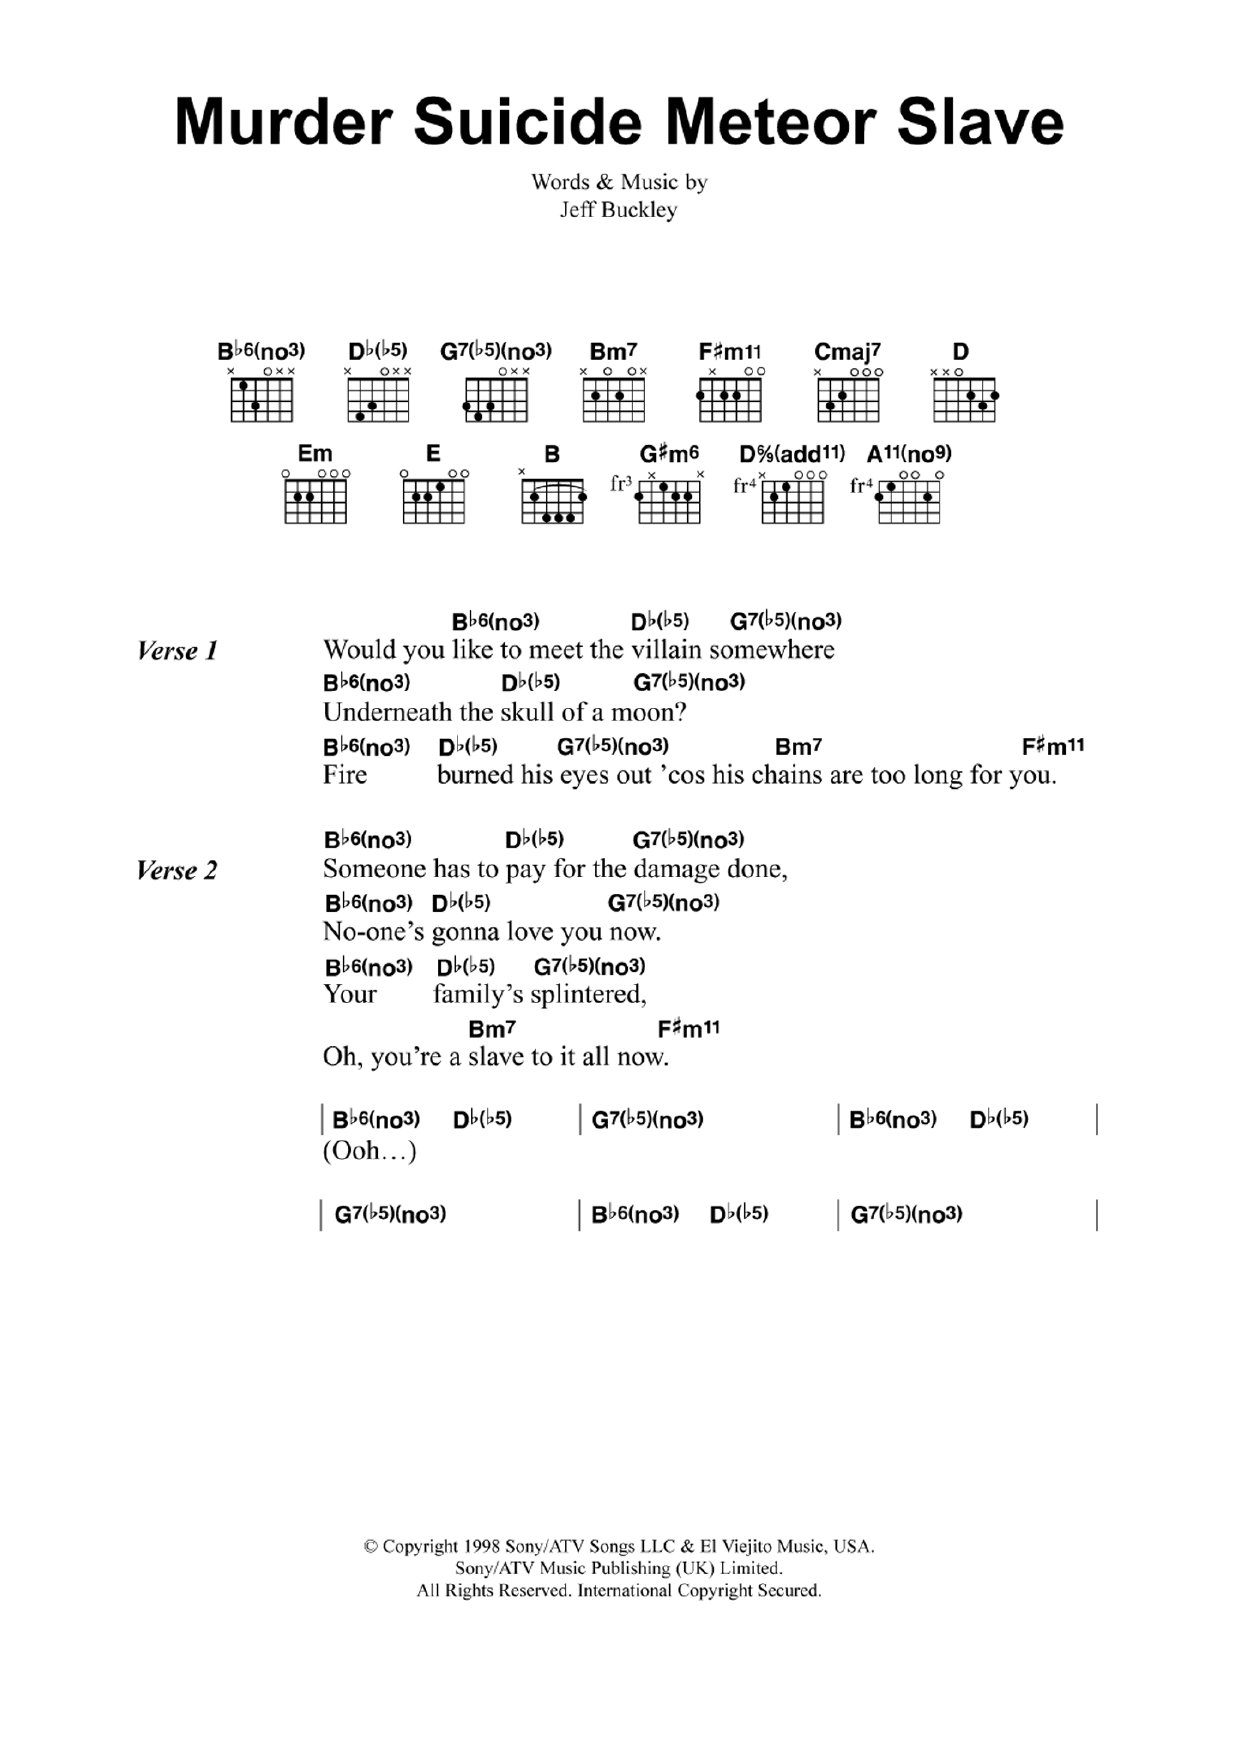 Jeff Buckley Murder Suicide Meteor Slave Sheet Music Notes & Chords for Lyrics & Chords - Download or Print PDF